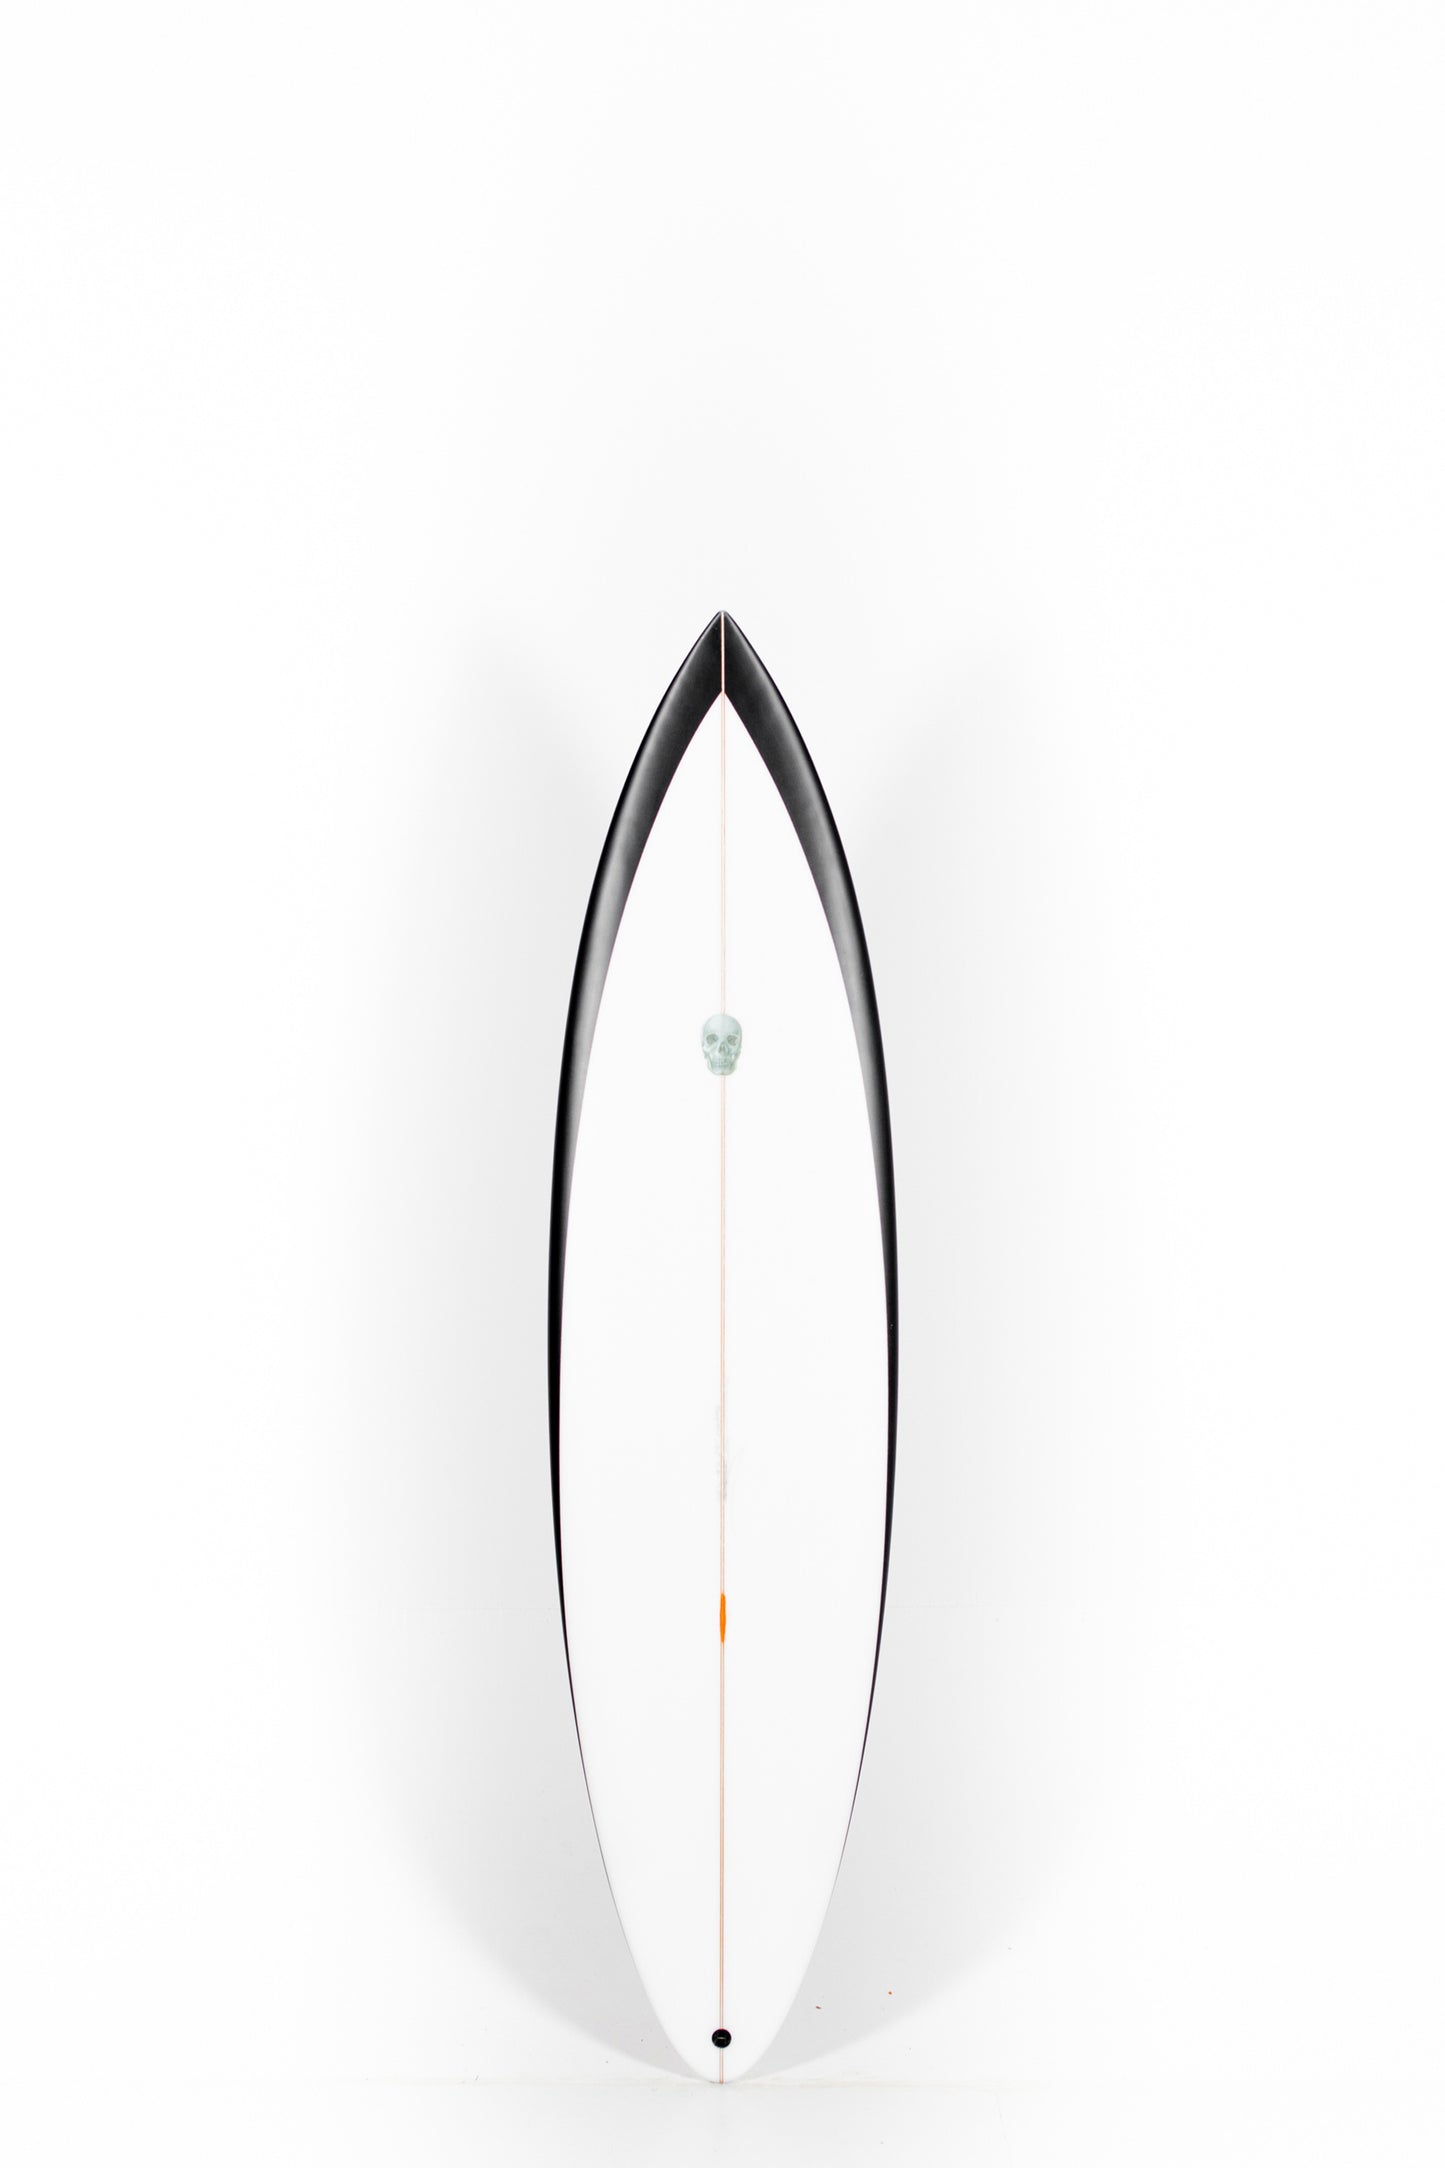 Pukas Surf Shop - Christenson Surfboards - CARRERA - 6'6" x 19 x 2 1/2 - CX03412